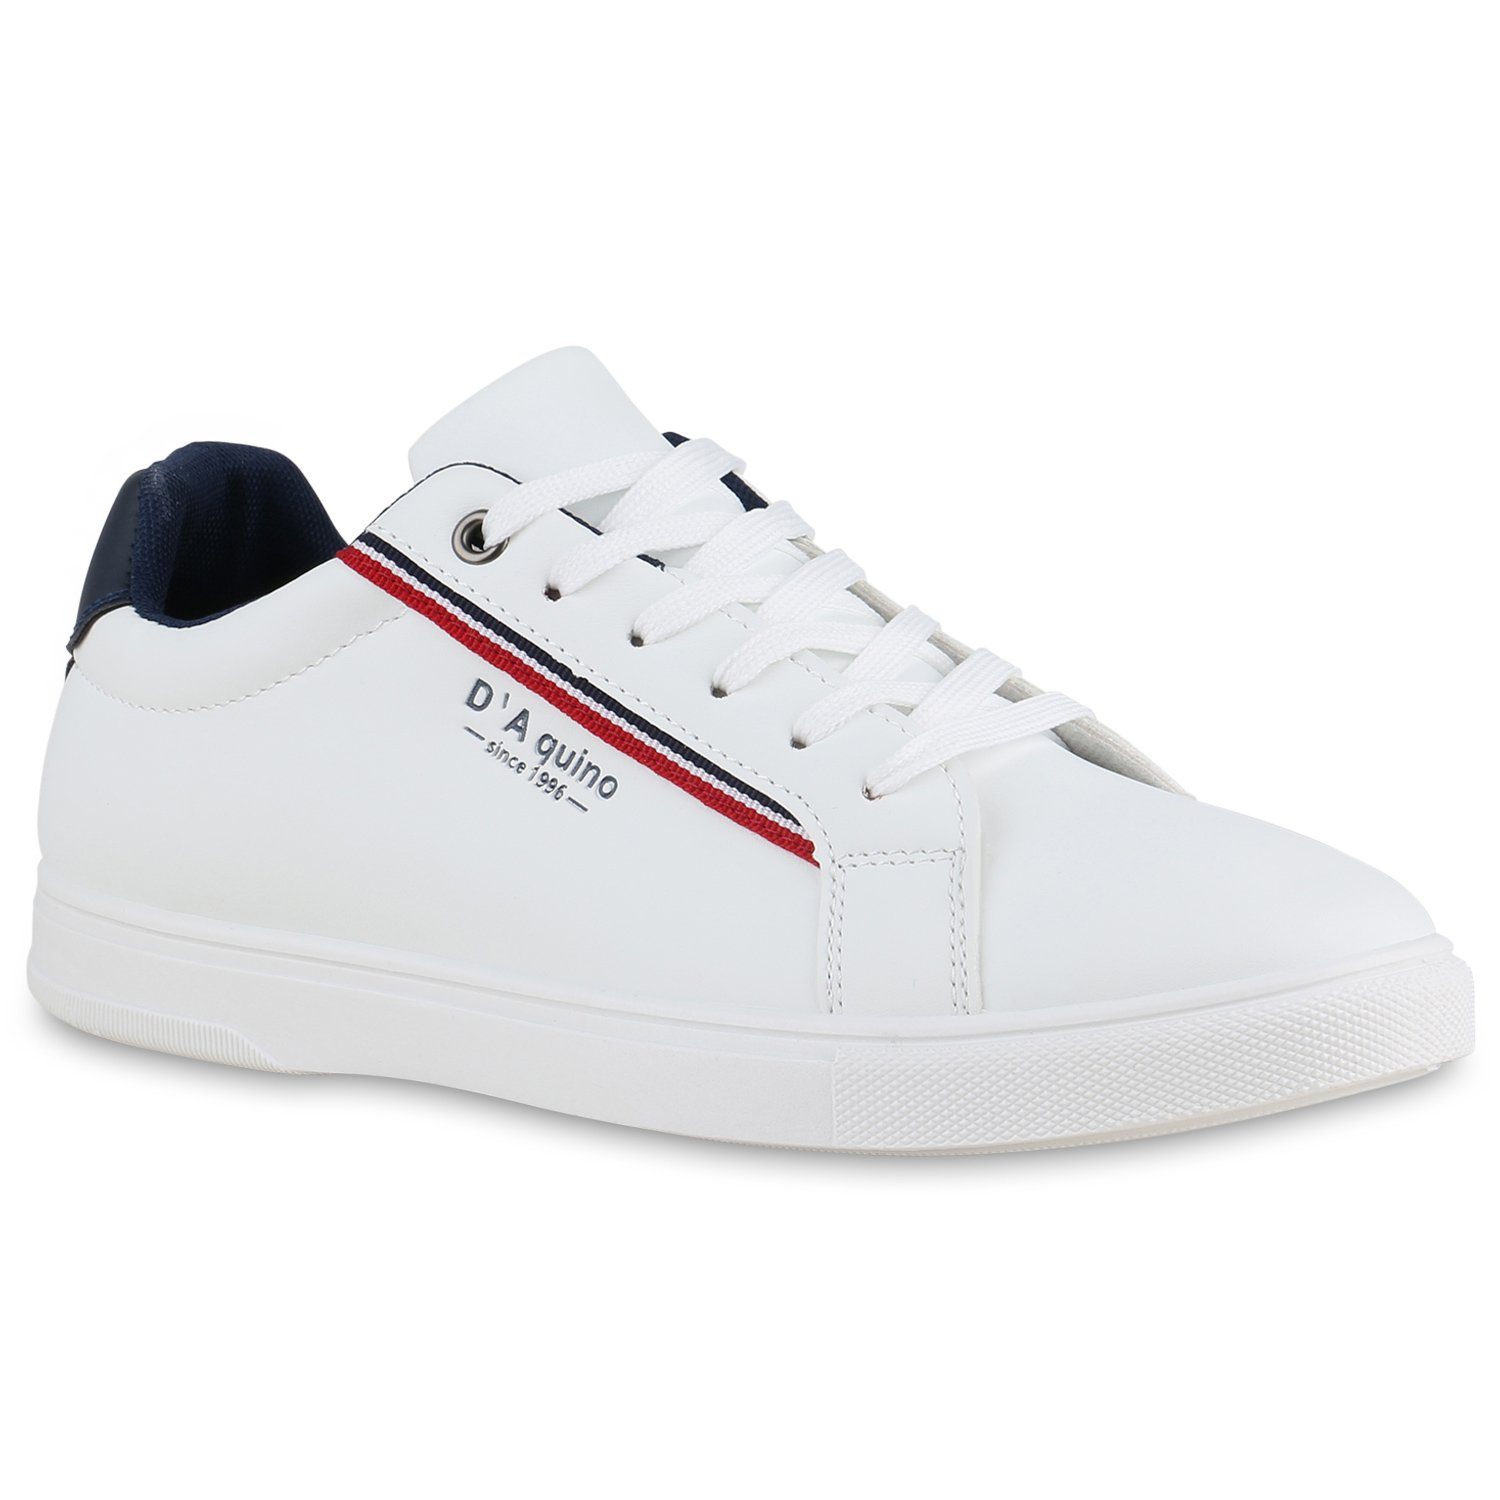 VAN HILL 840514 Sneaker Schuhe